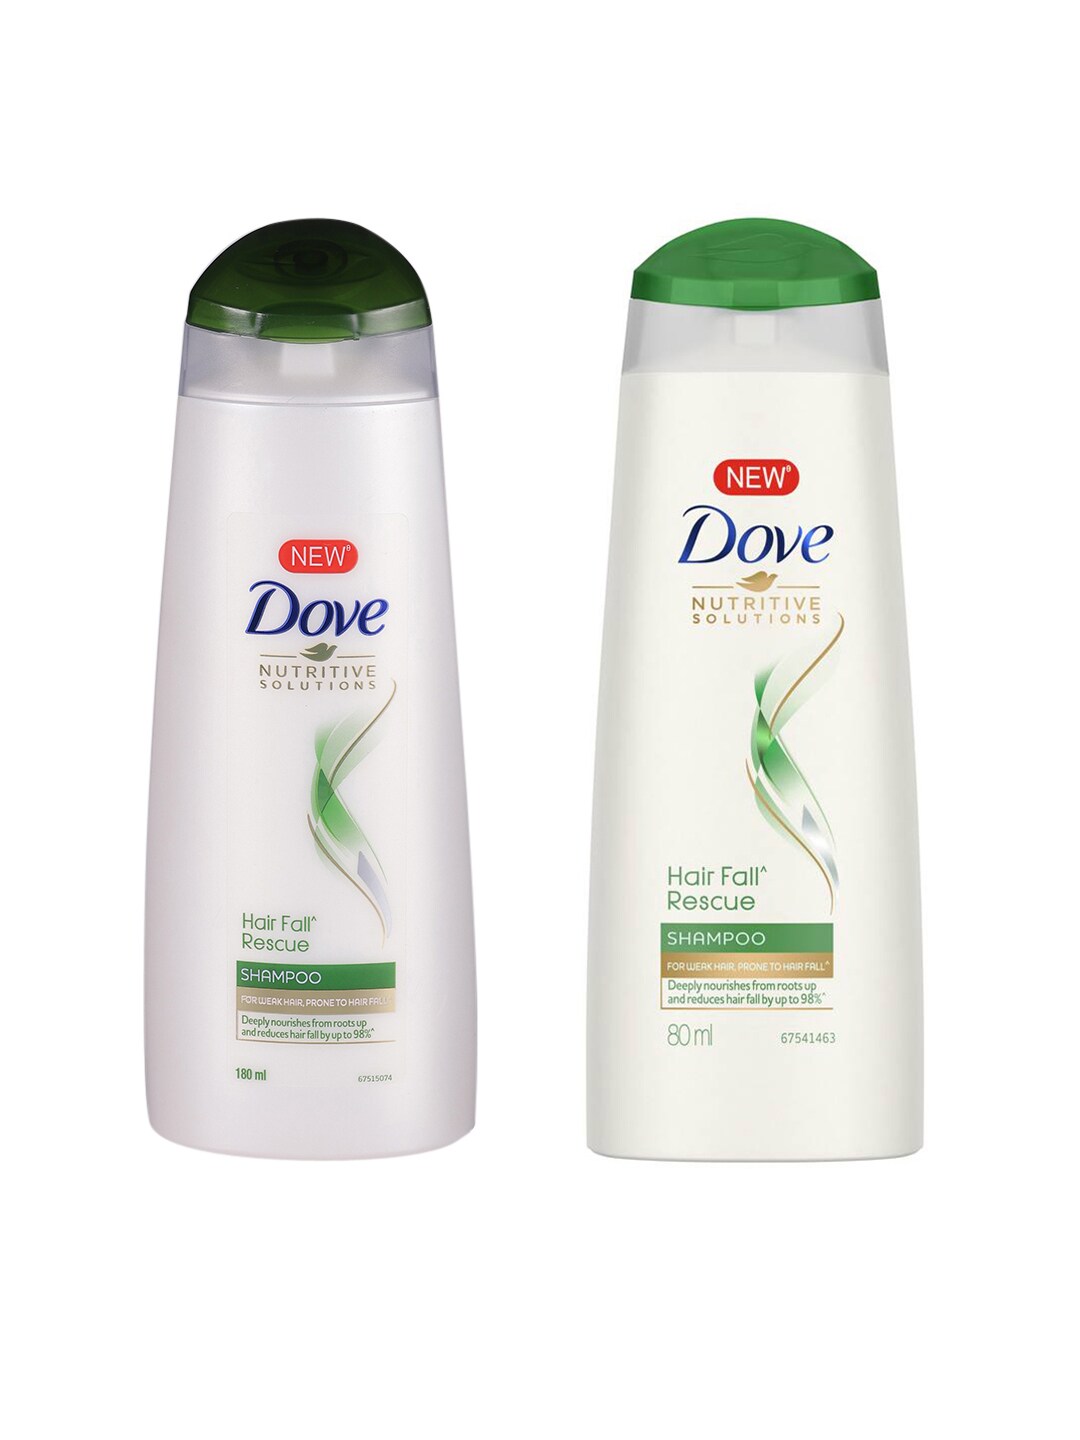 Dove Unisex Hair Fall Rescue Shampoo & Hair Fall Rescue Shampoo Price in India